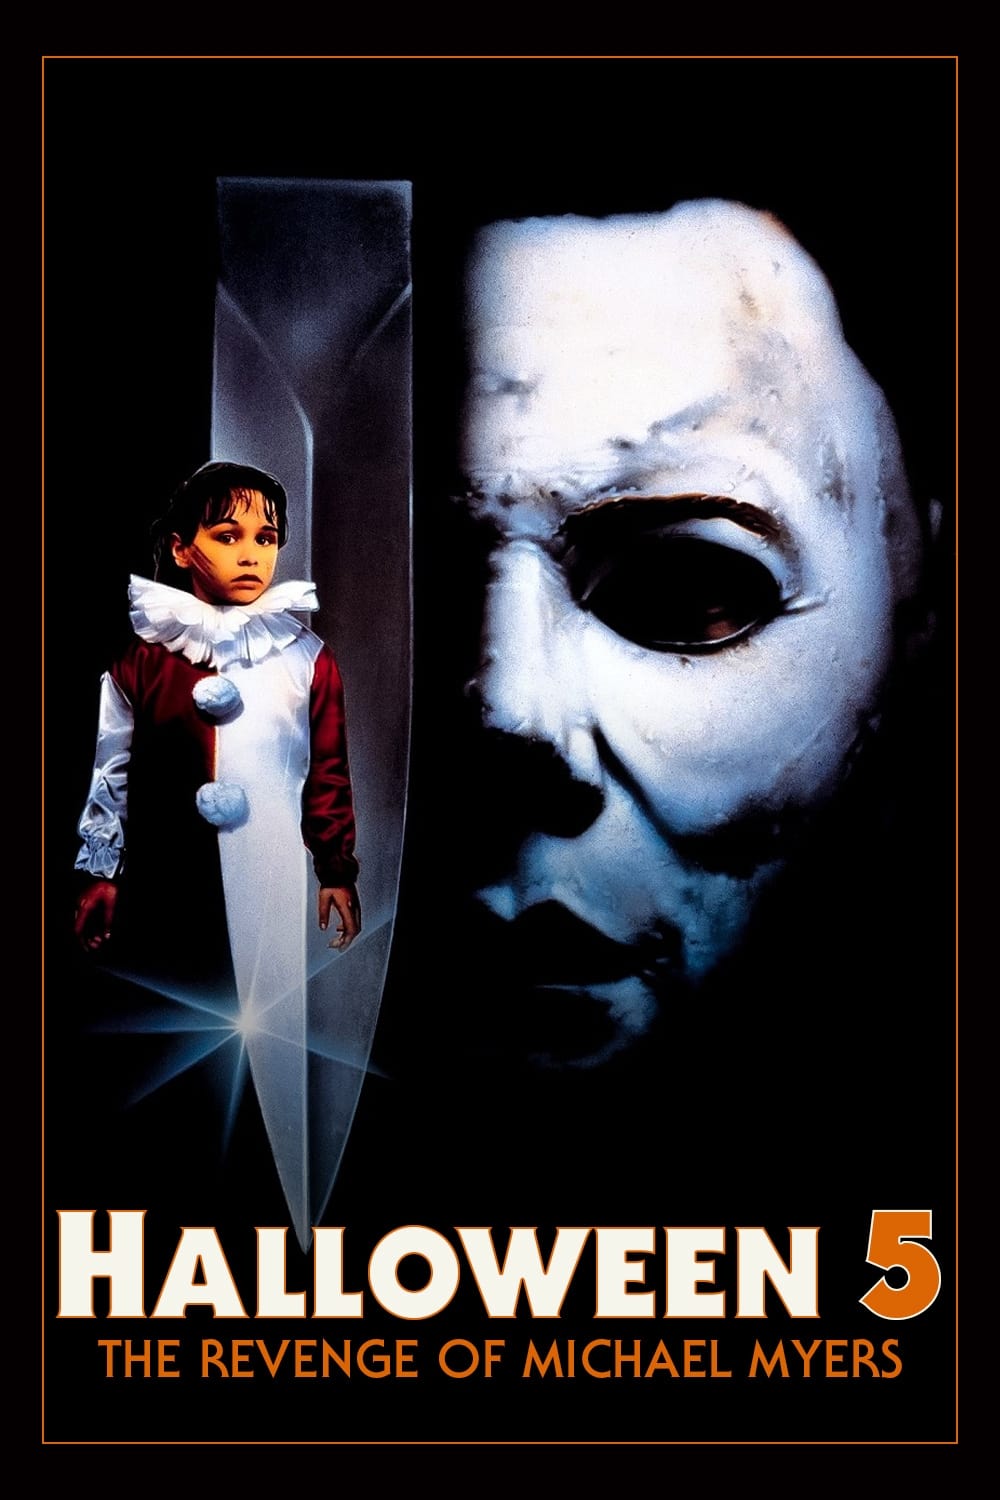 Halloween 5: La venganza de Michael Myers